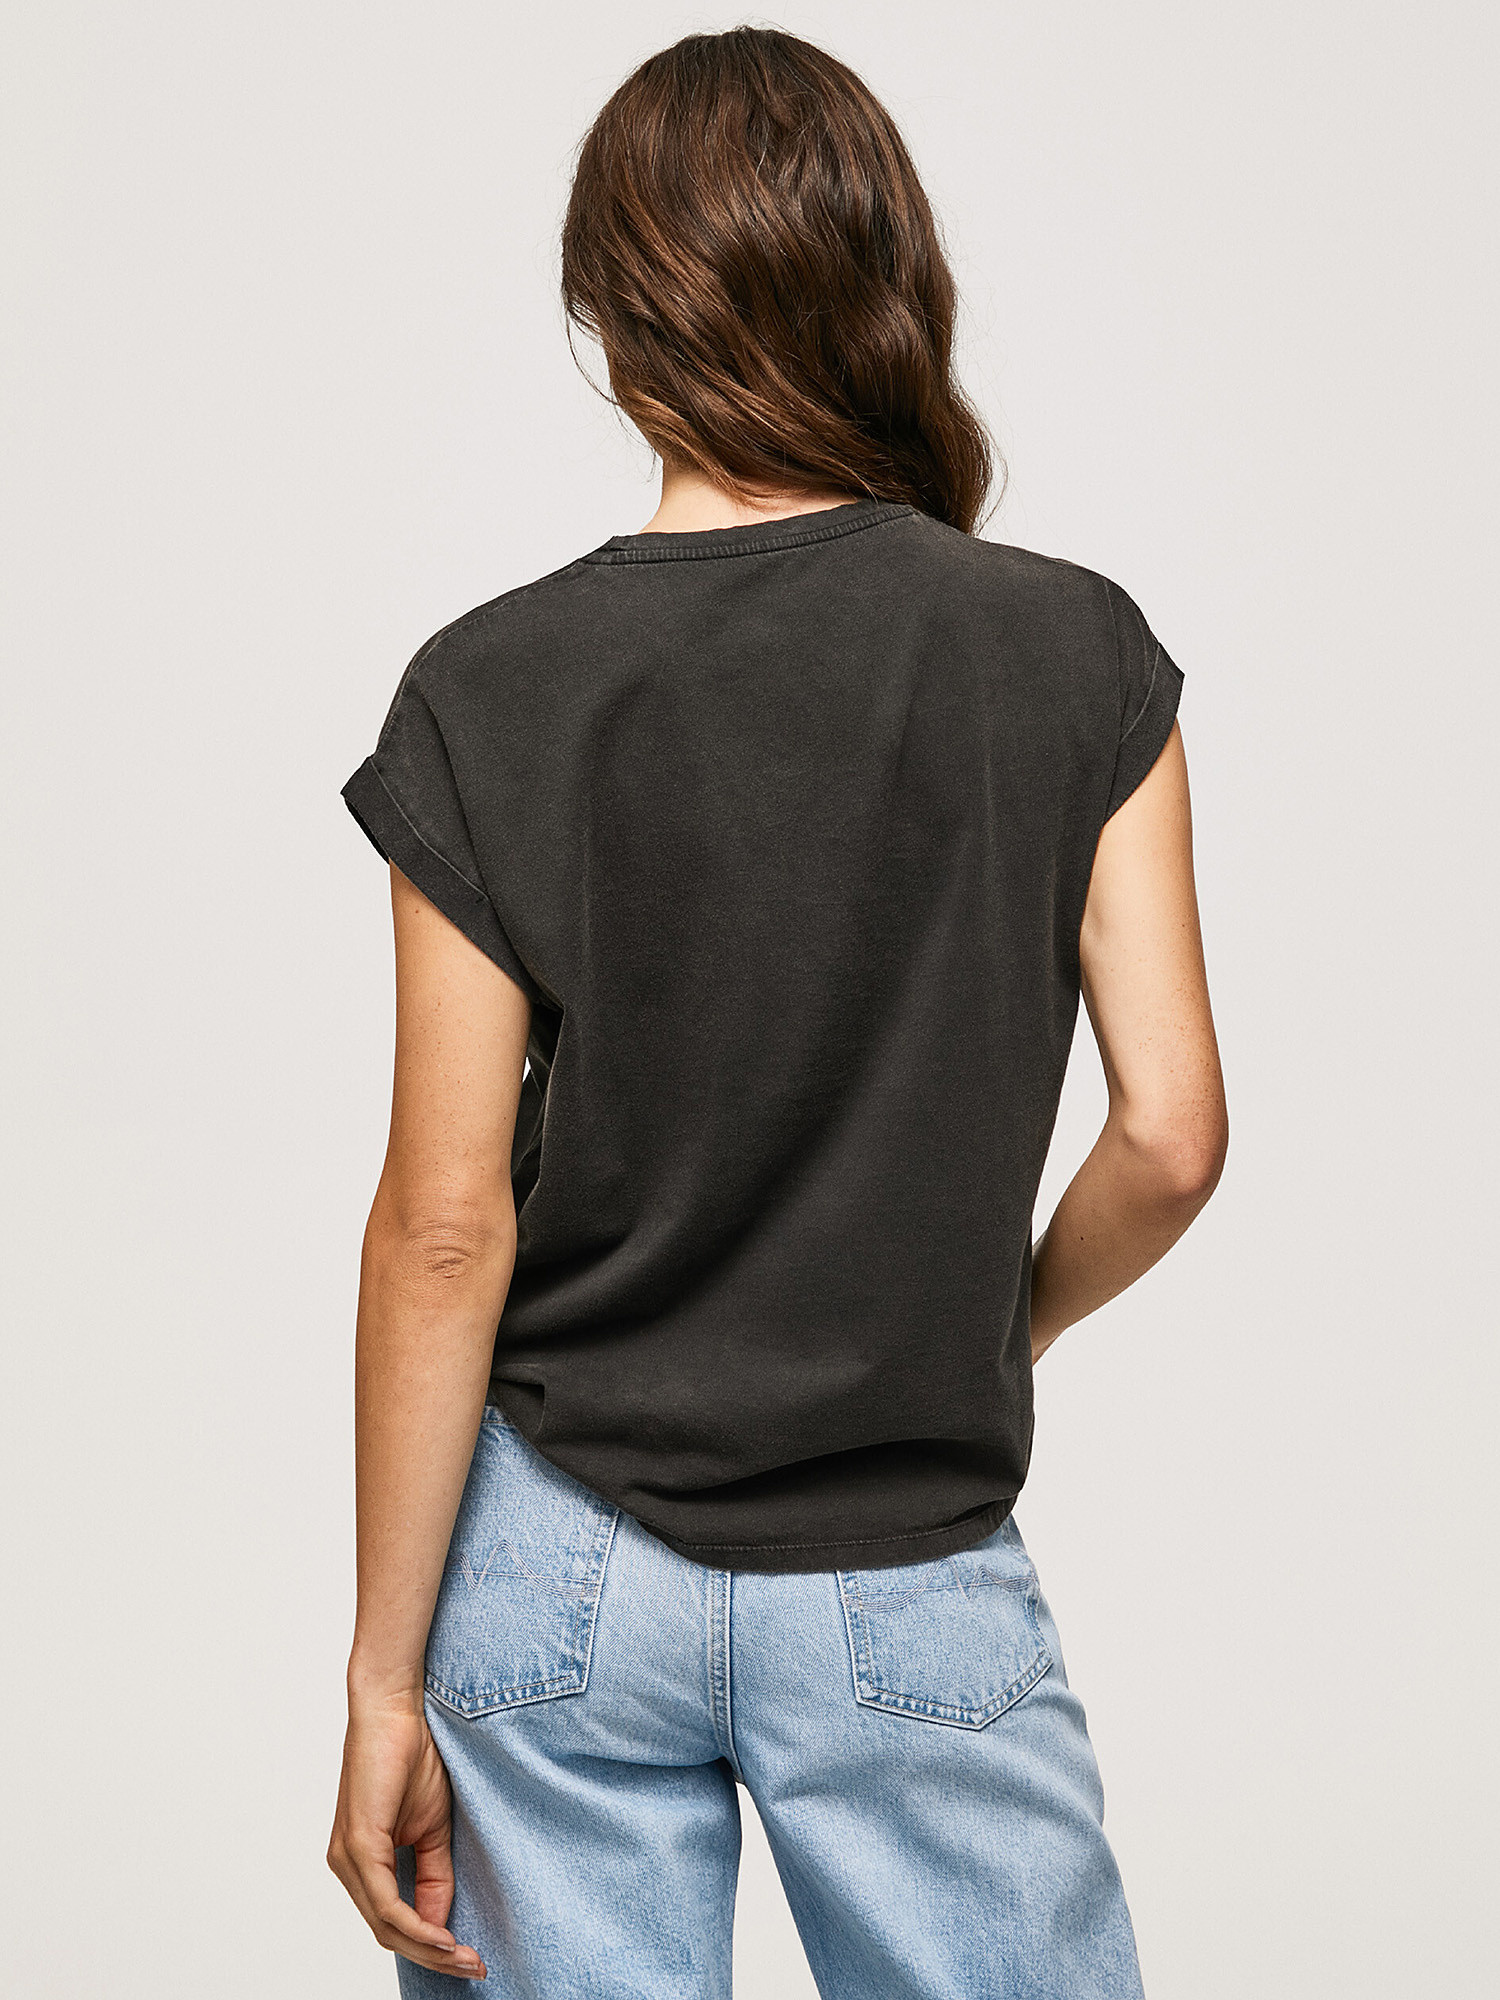 Pepe Jeans - Cotton logo T-shirt, Black, large image number 4